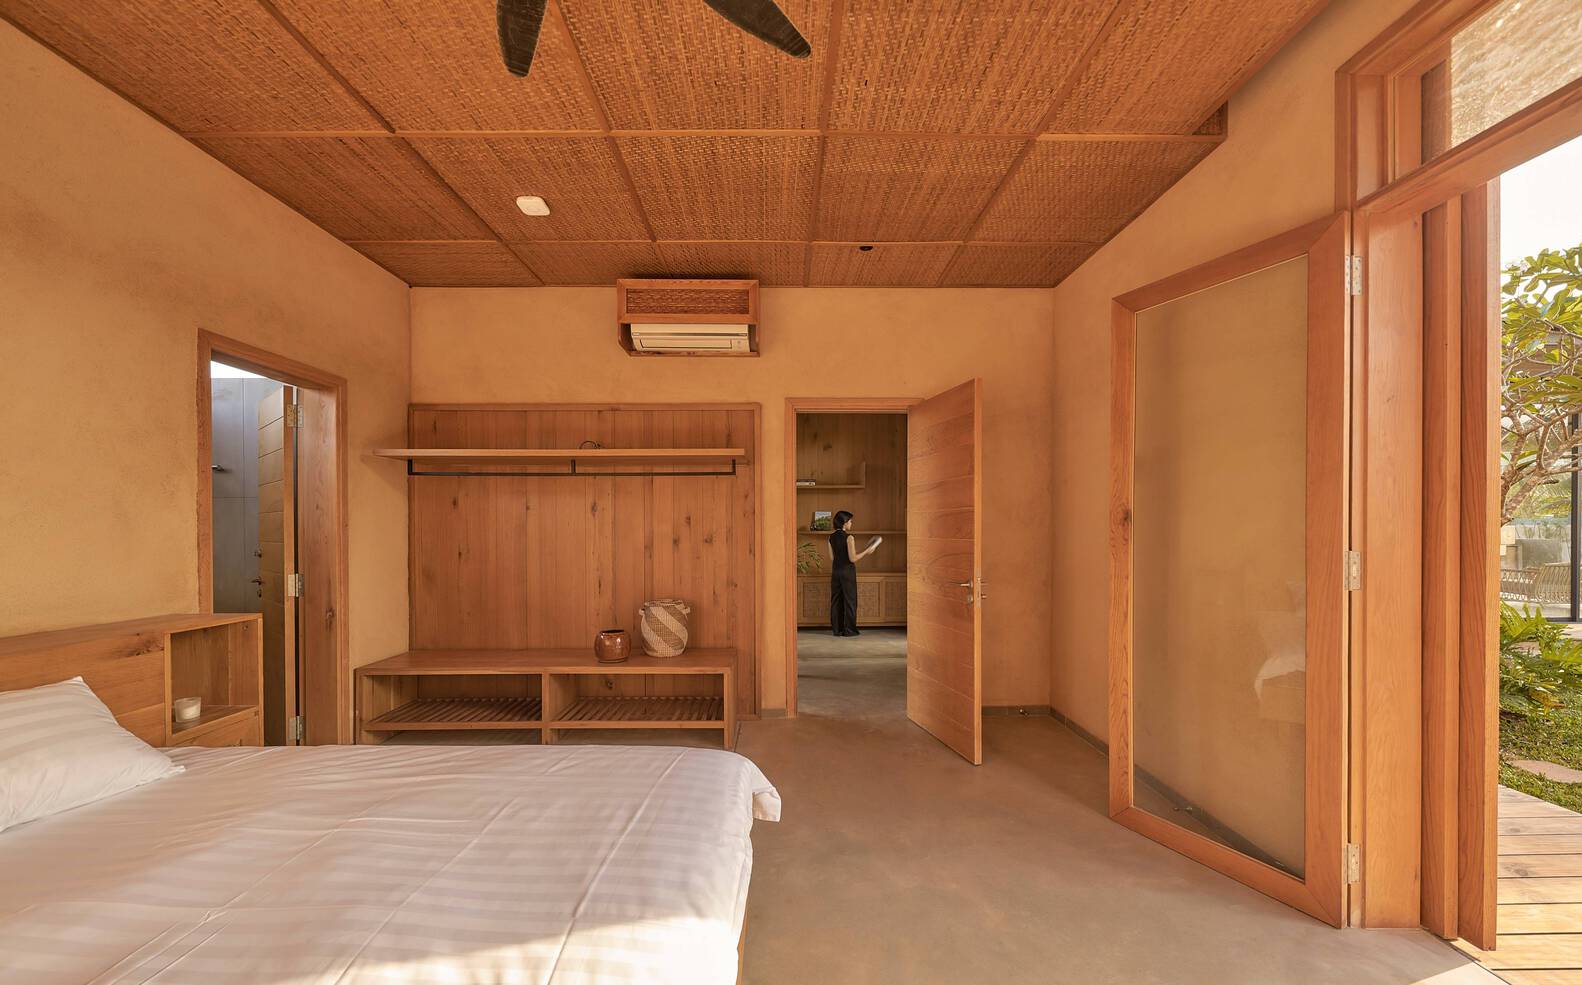 Bedroom with wood casings.